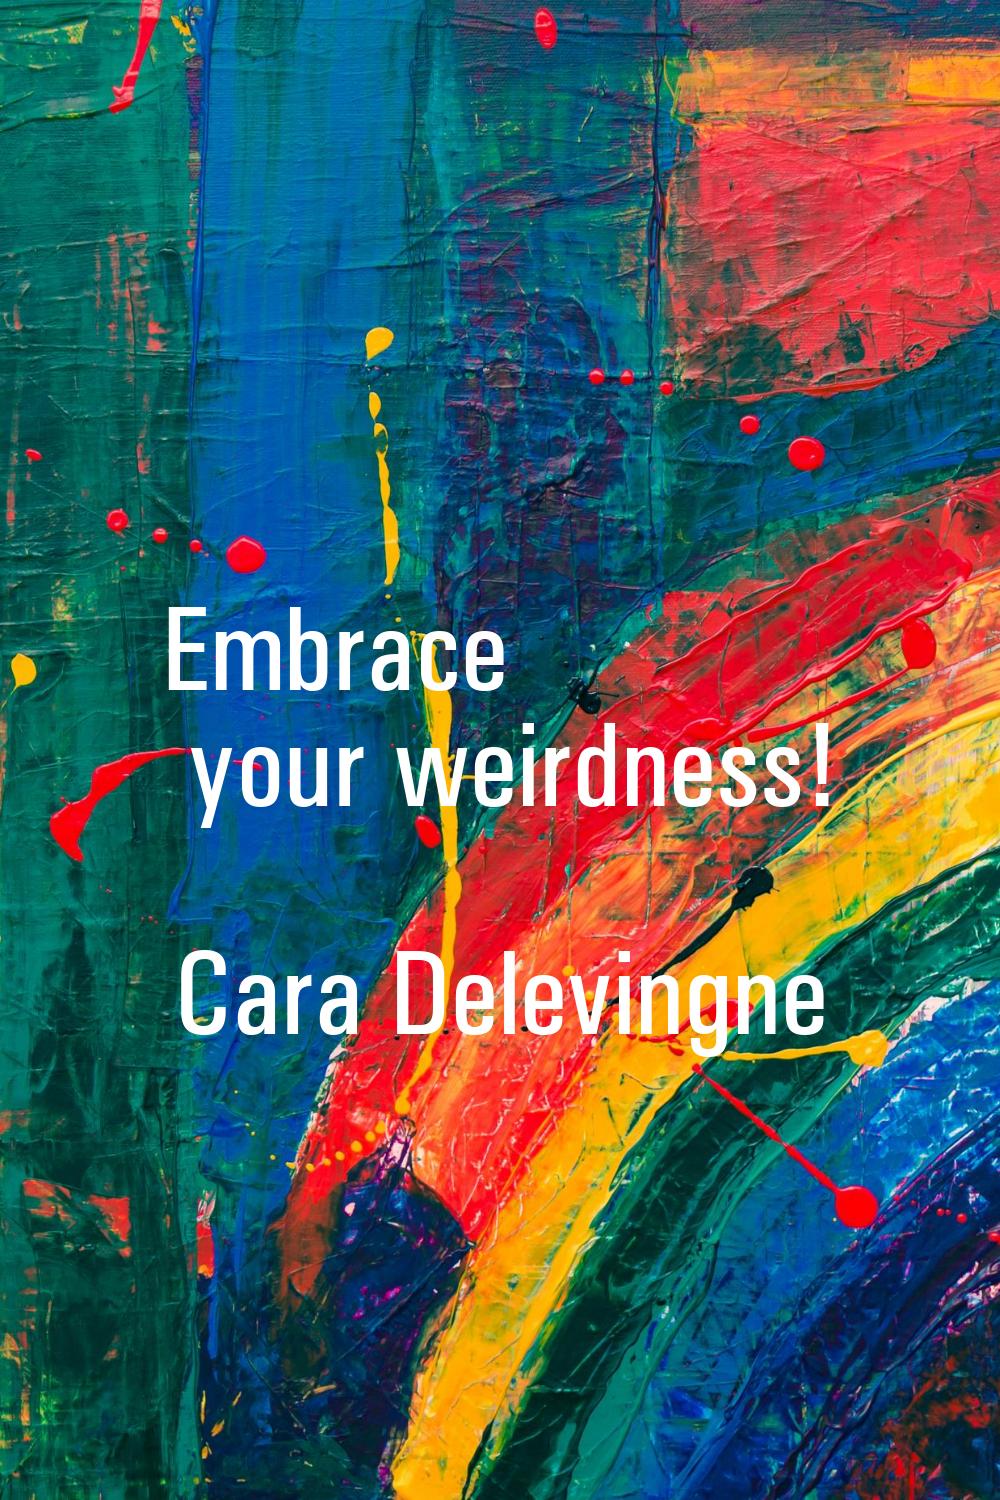 Embrace your weirdness!